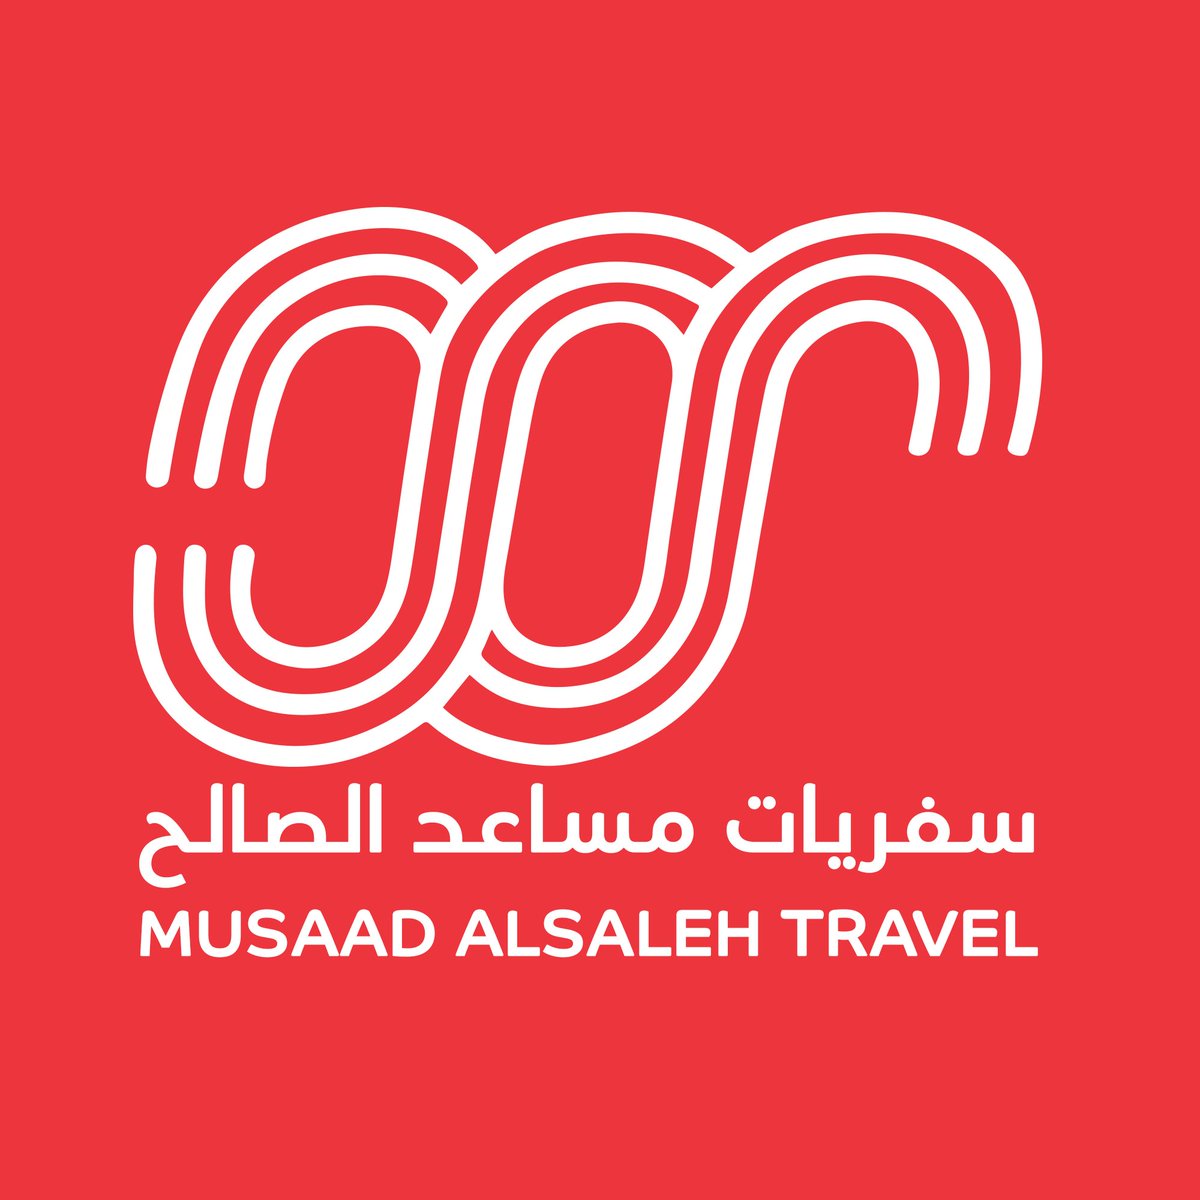 Travel Consultant Job in Musaad Al Saleh Travel - Al Qiblah